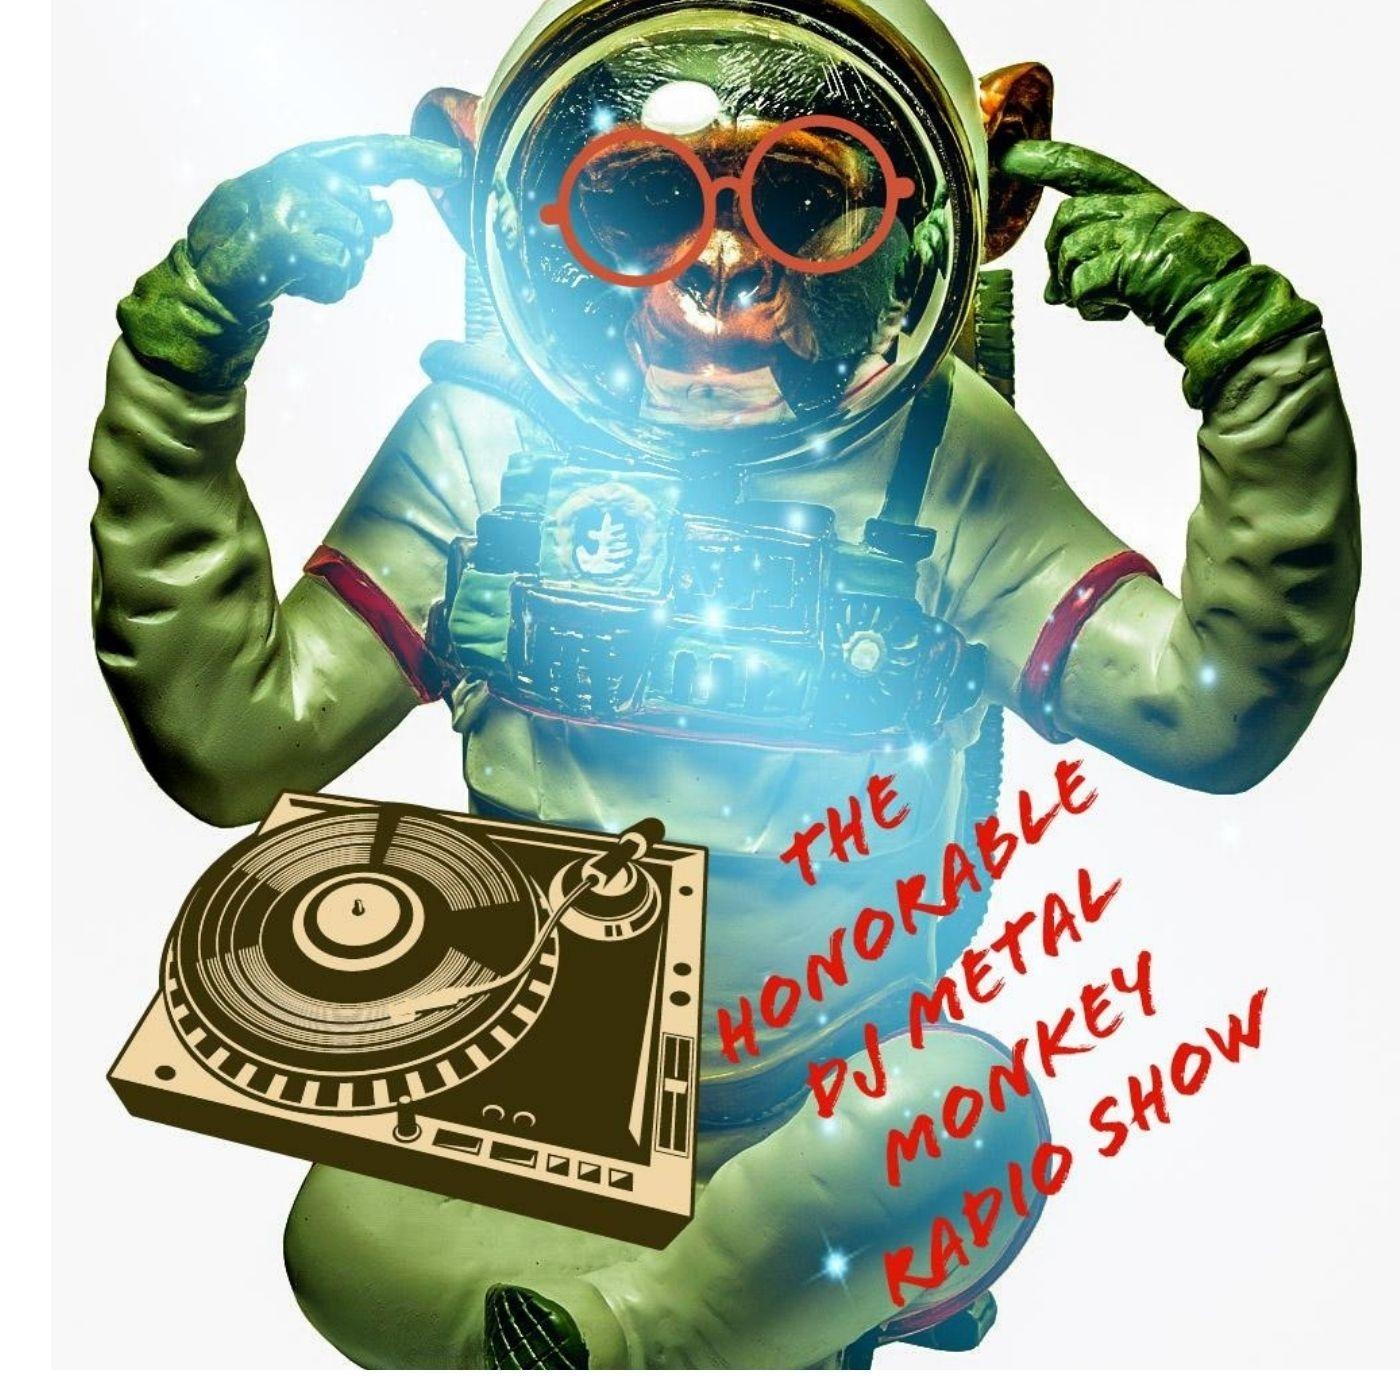 The Honorable DJ Metal Monkey Radio Show